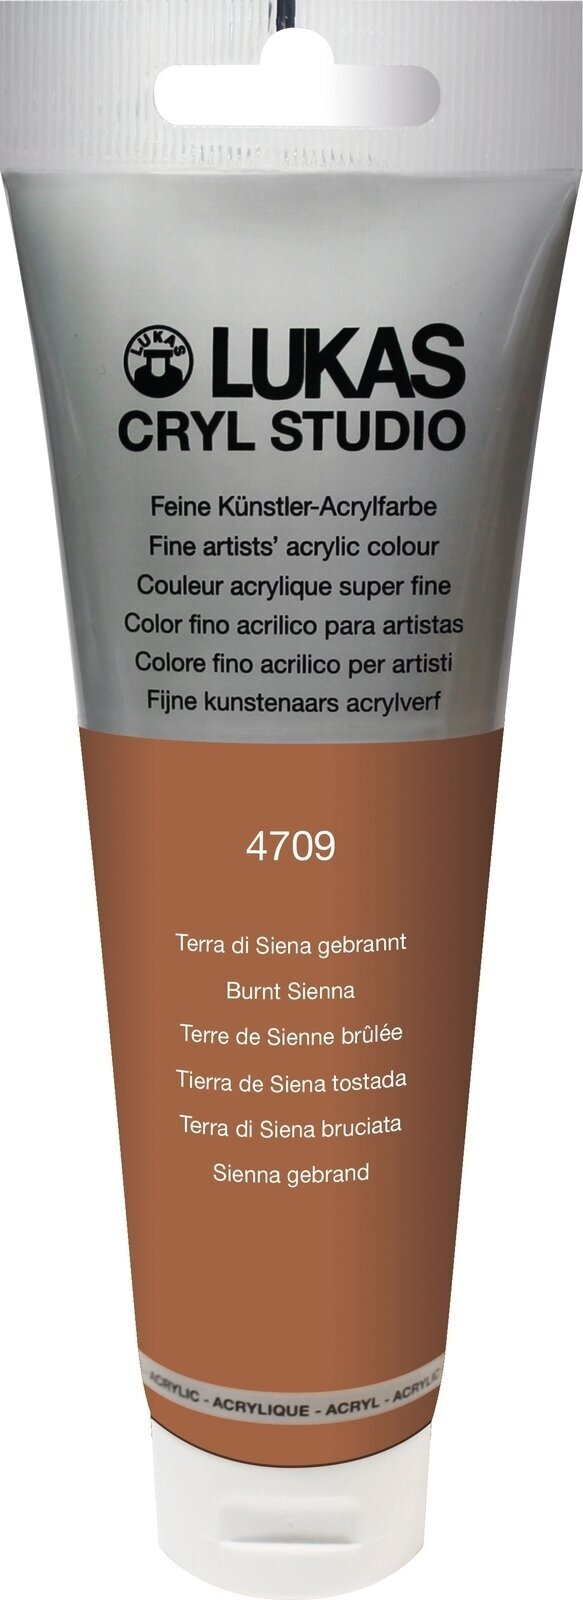 Akrylová farba Lukas Cryl Studio Acrylic Paint Plastic Tube Akrylová farba Burnt Sienna 125 ml 1 ks